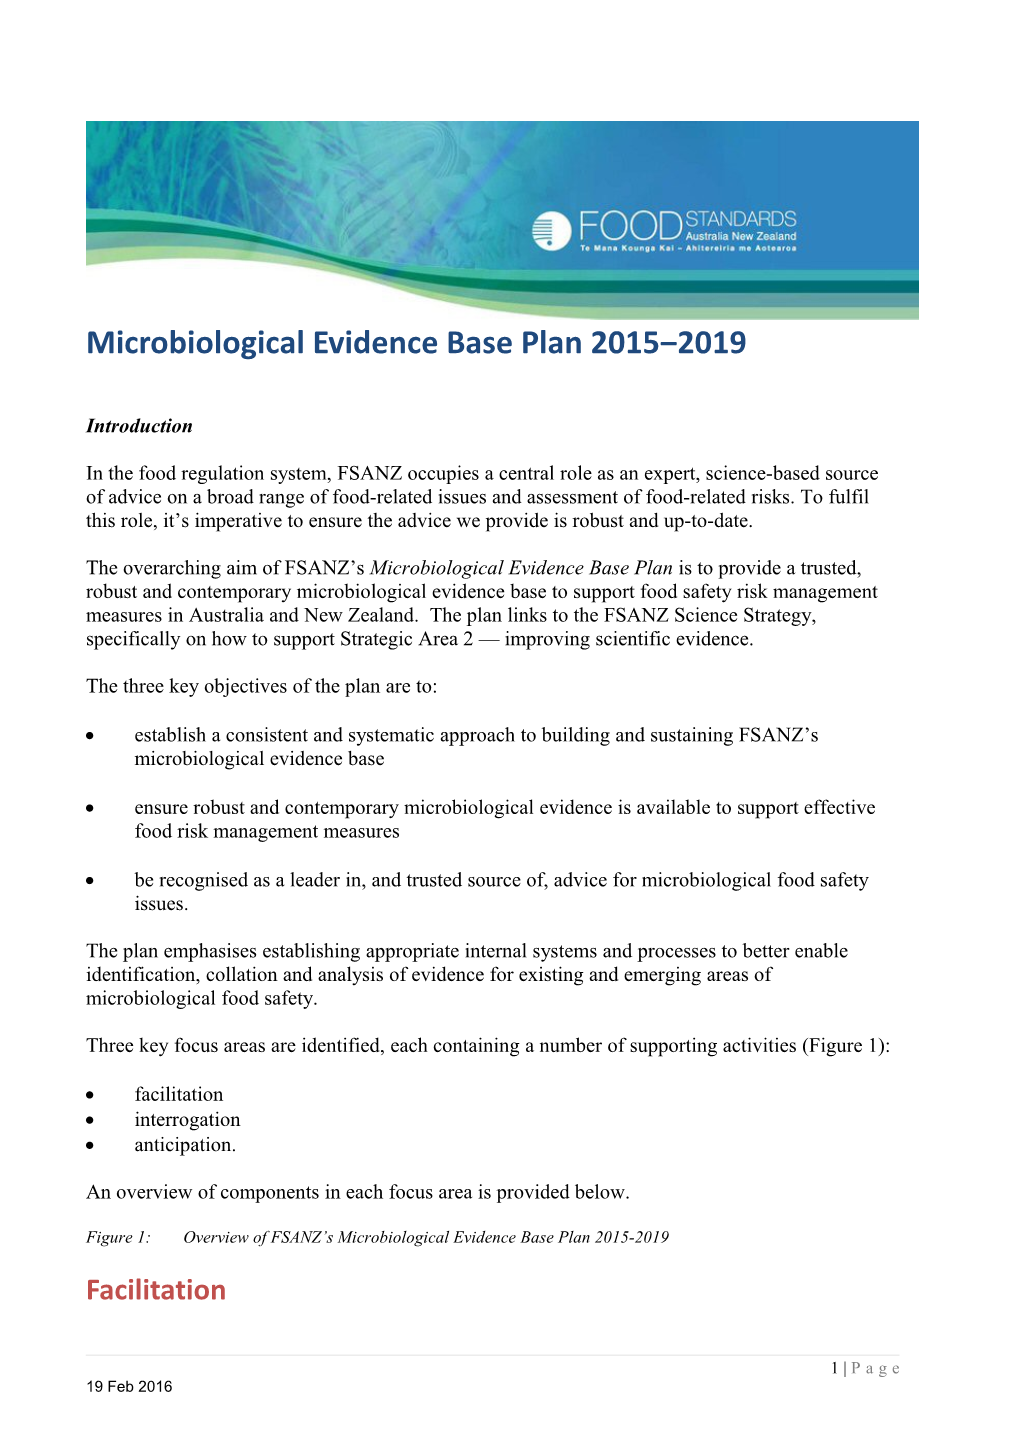 Micro Evidence Base Plan 2015-2019